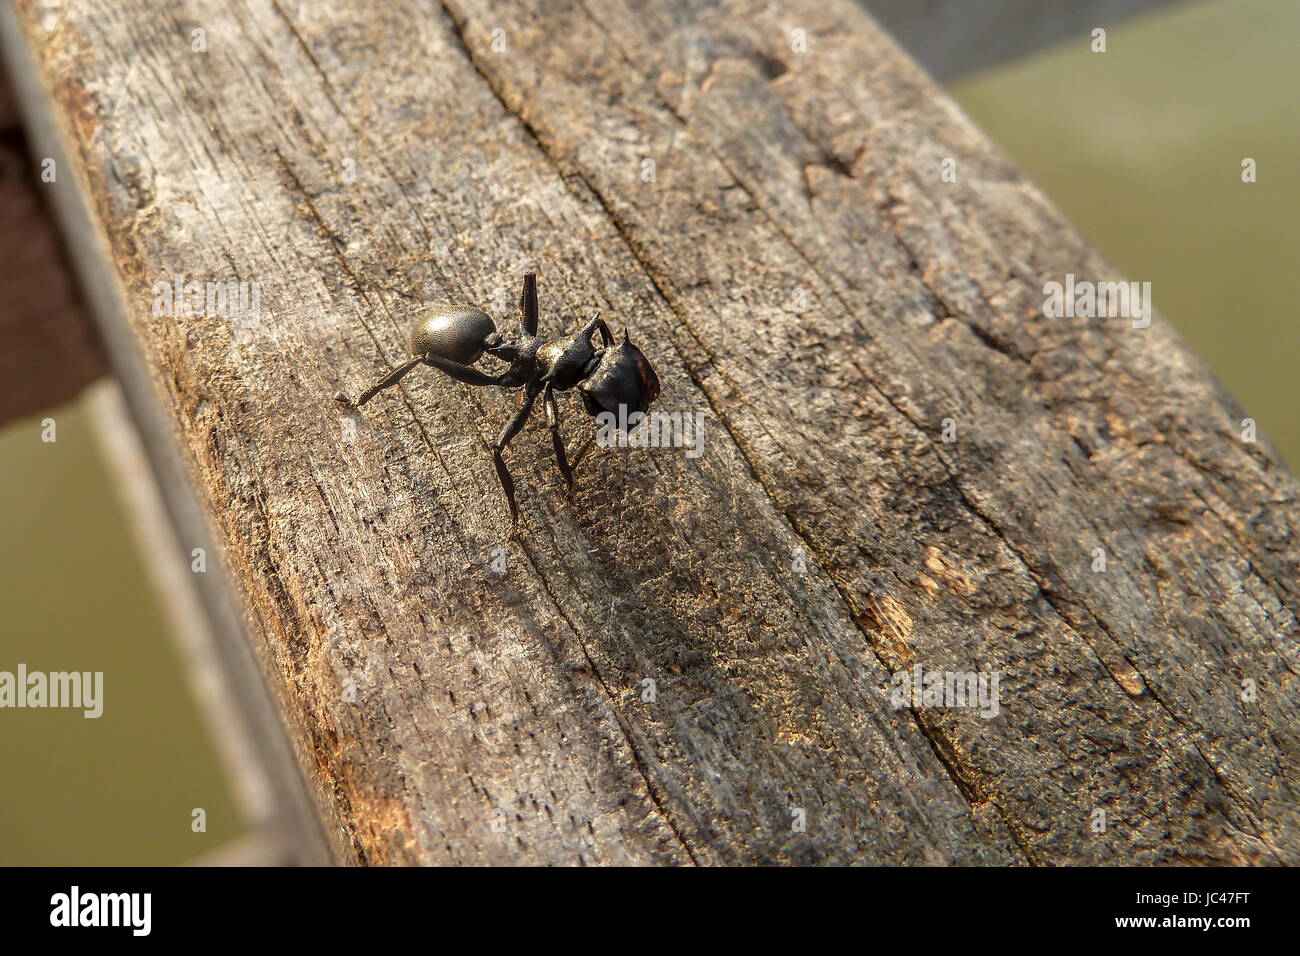 Piccoli Black ant seduta su una botte corrimano, Pantanal, Brasile Foto Stock